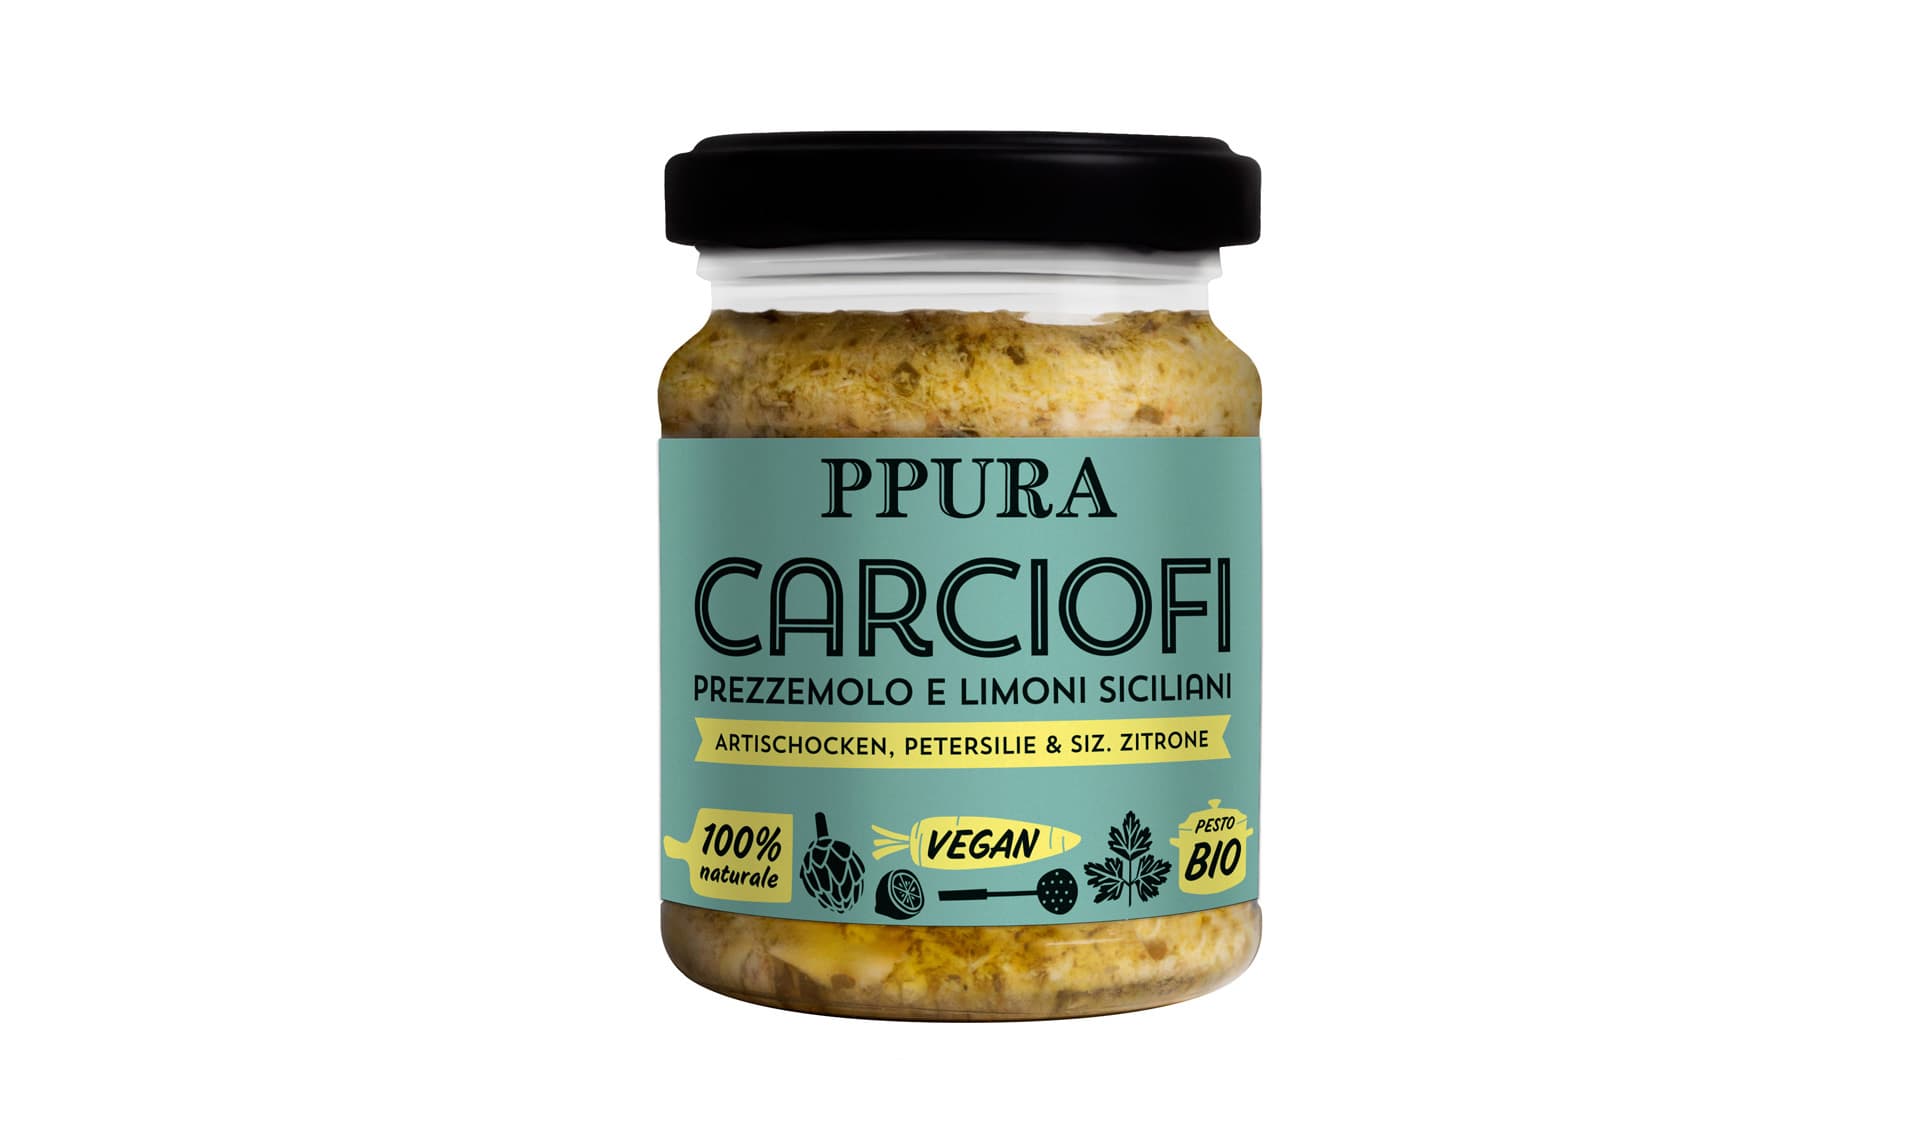 PPura (www.ppura.ch) Carciofi Artischocken, Petersilie, Zitrone